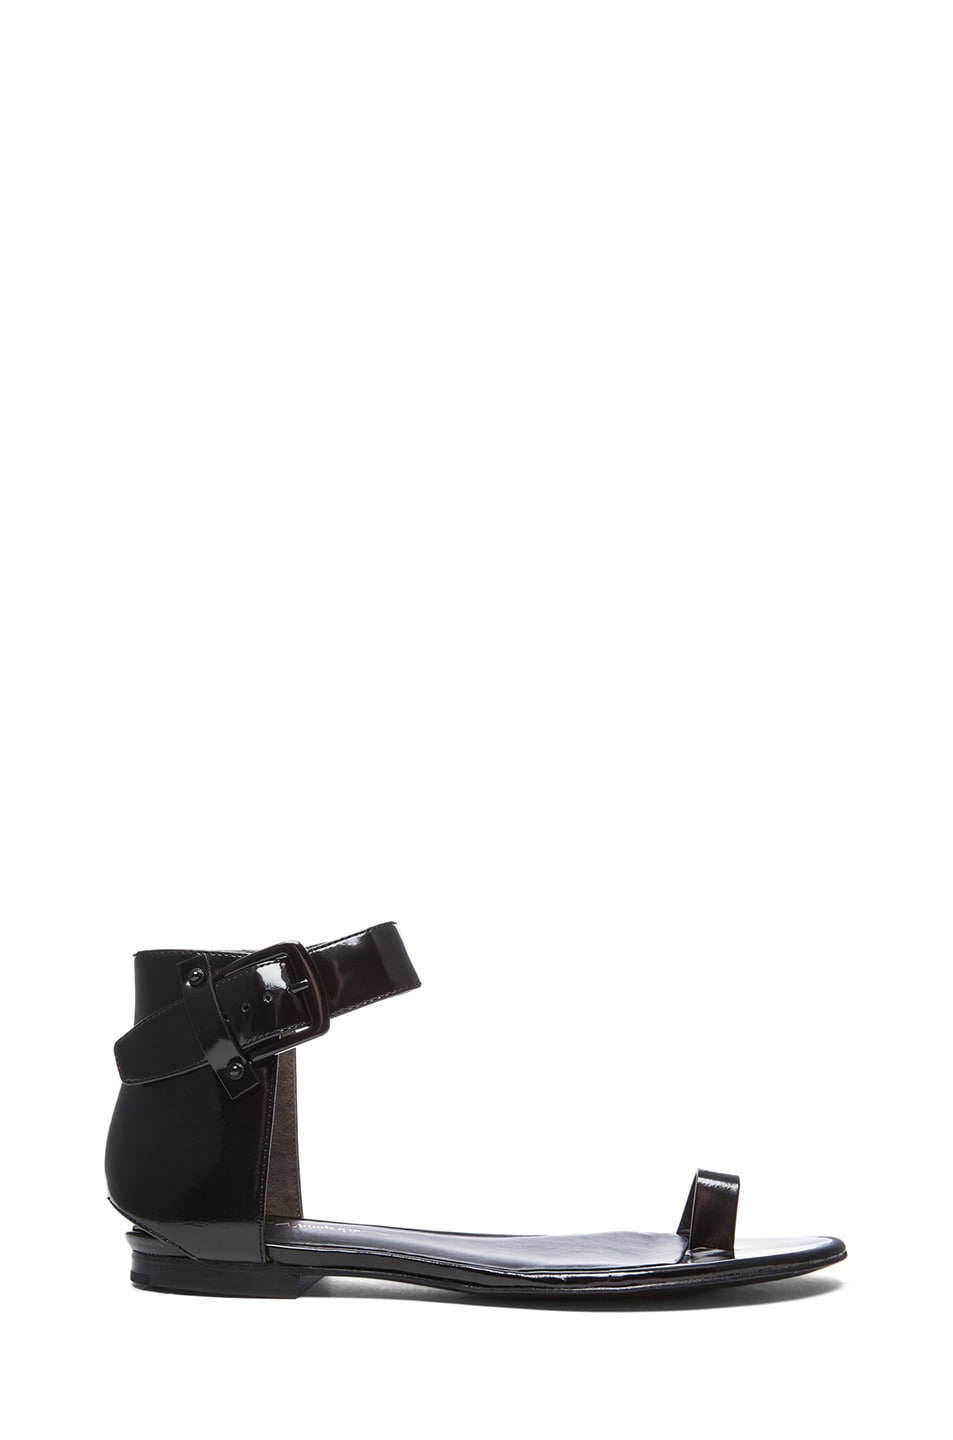 3.1 phillip lim Isabela Leather Flat Sandals in Black | FWRD